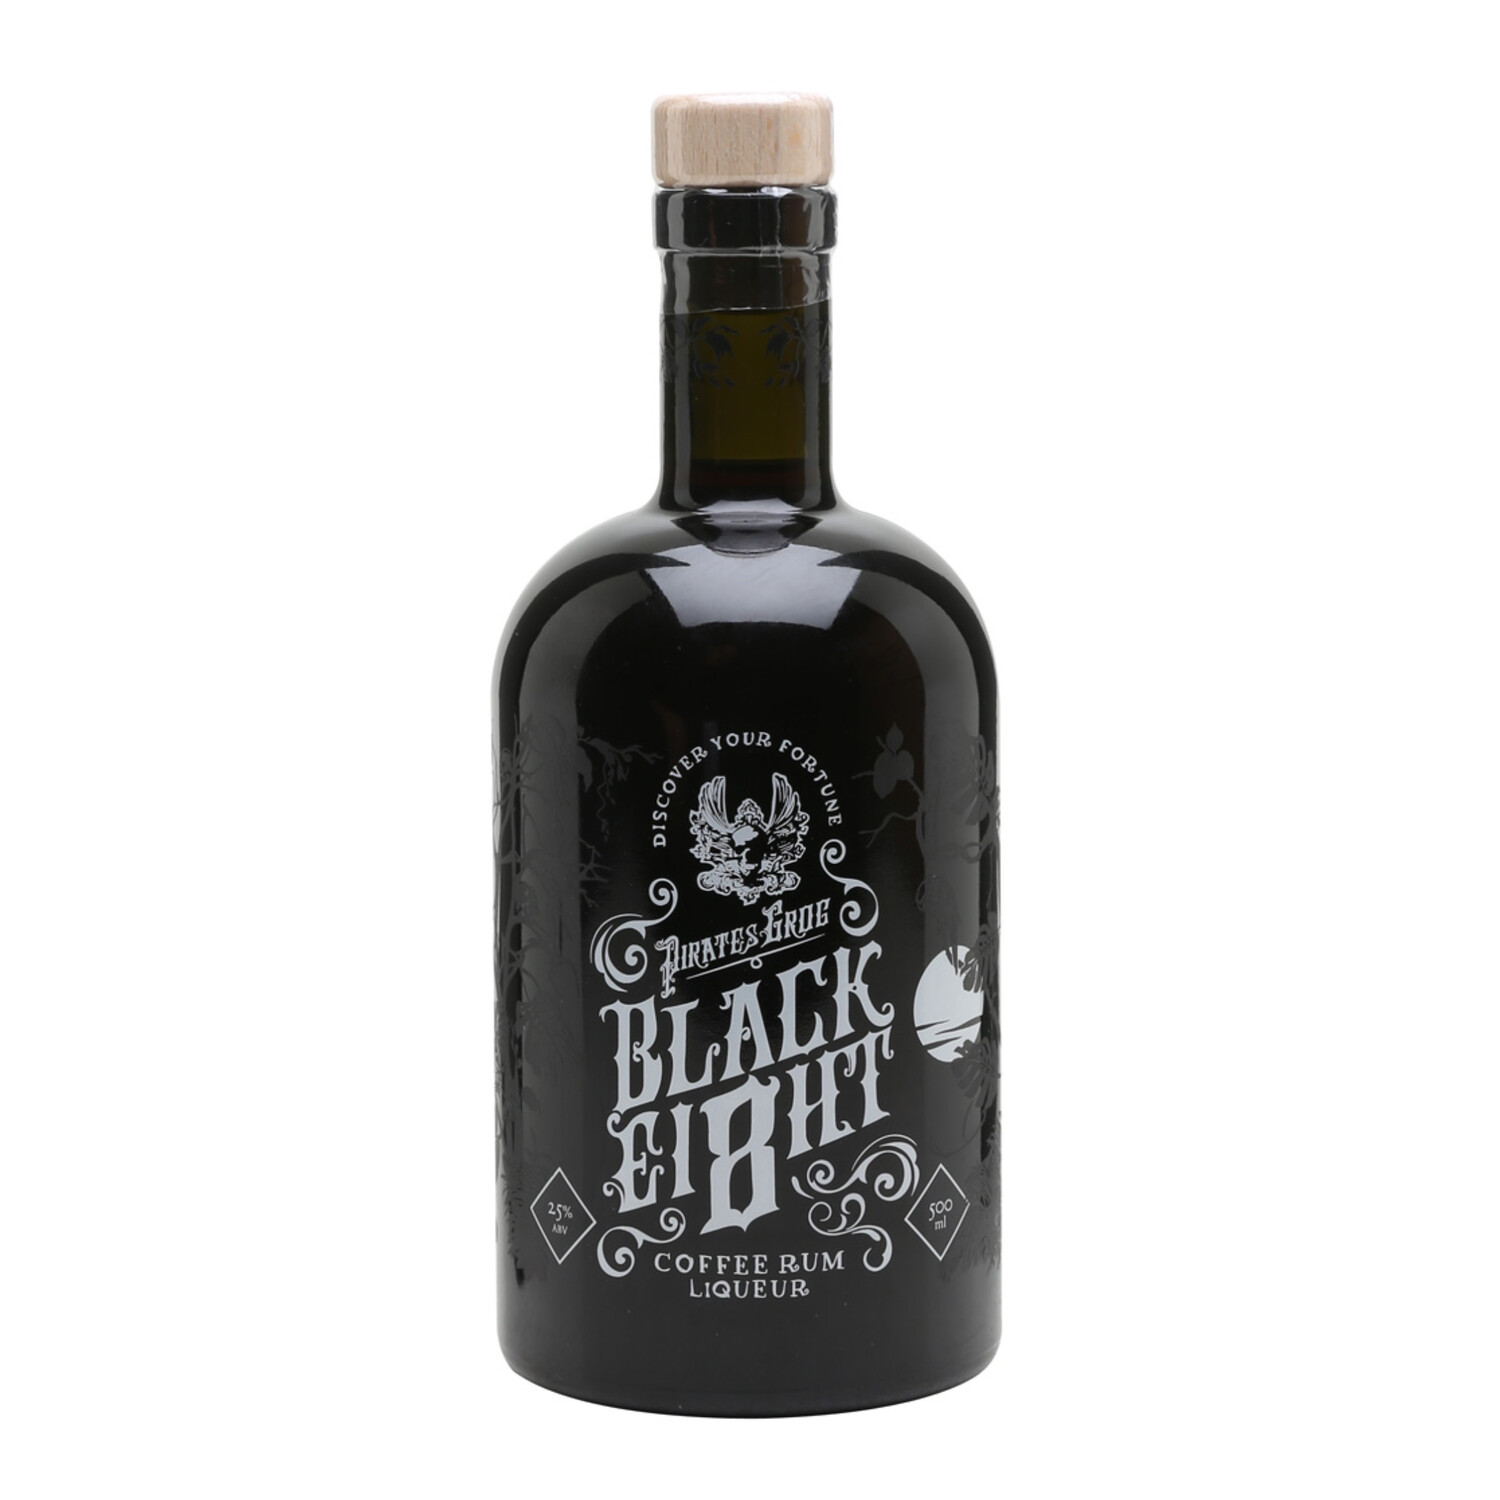 Pirate's Grog Black Ei8ht Rum